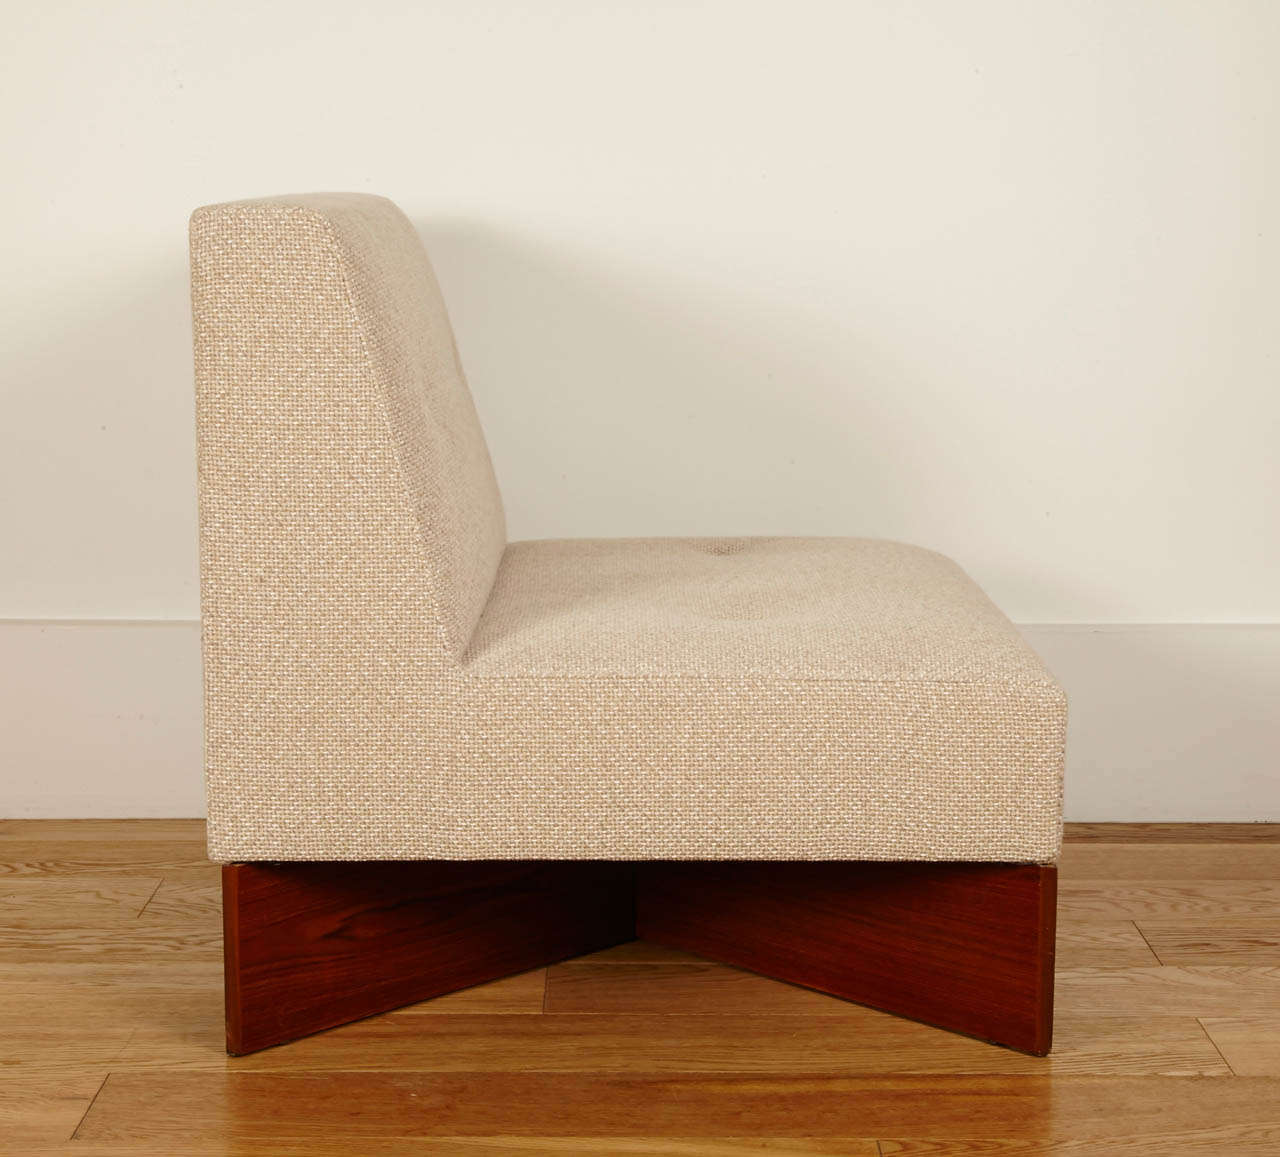 Mid-20th Century Living Room Furniture - Pierre Guariche - Edition Minvielle - 1960 For Sale